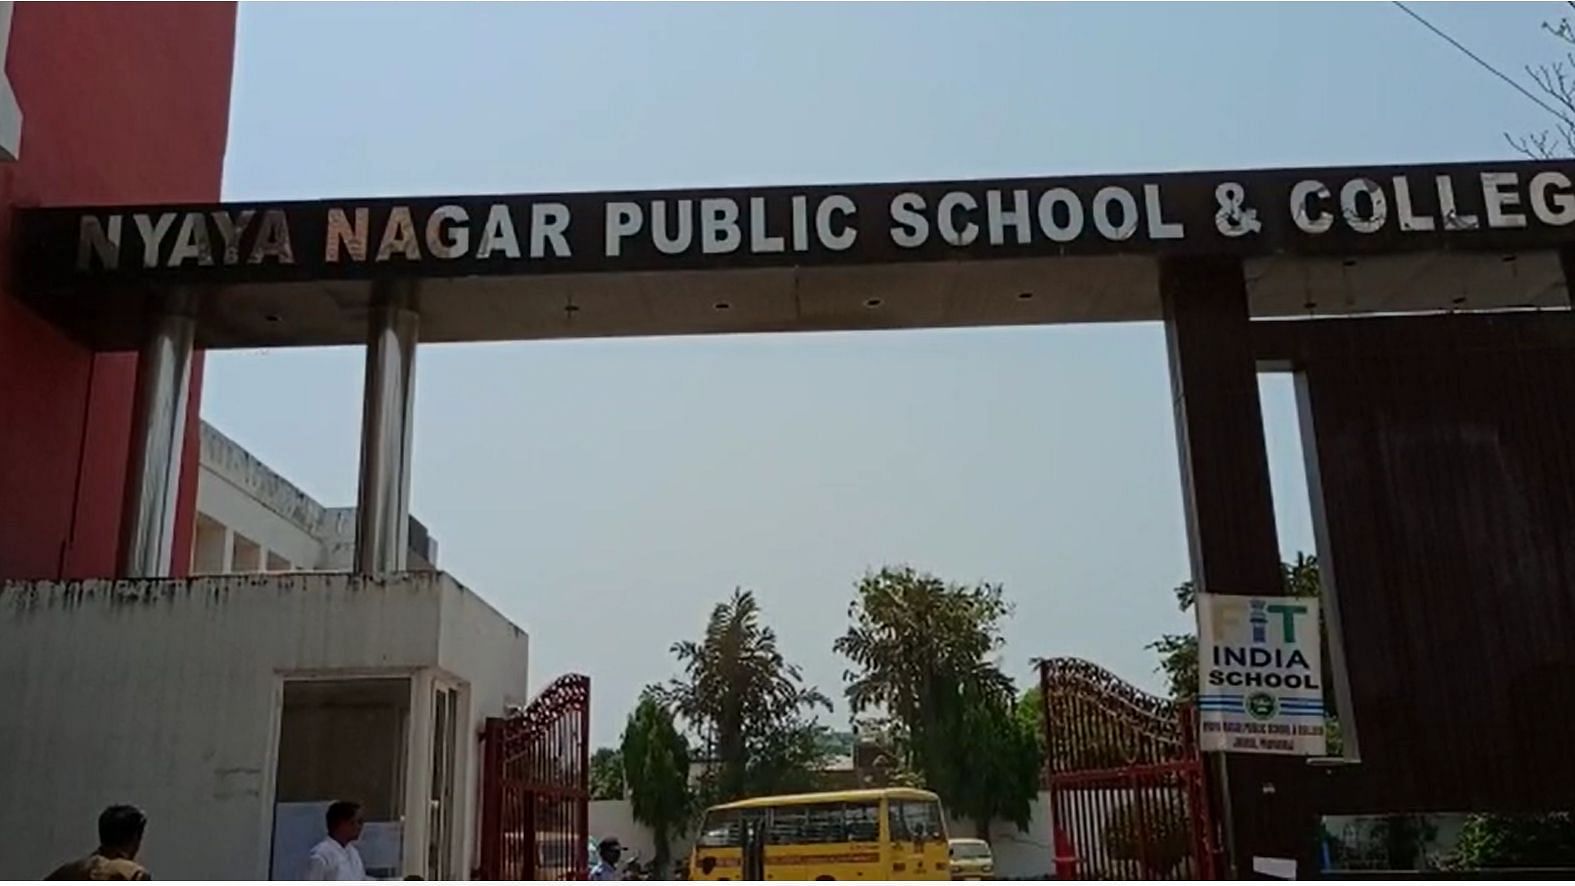 <div class="paragraphs"><p>Nyaya Nagar Public School has over 1,200 students.</p></div>